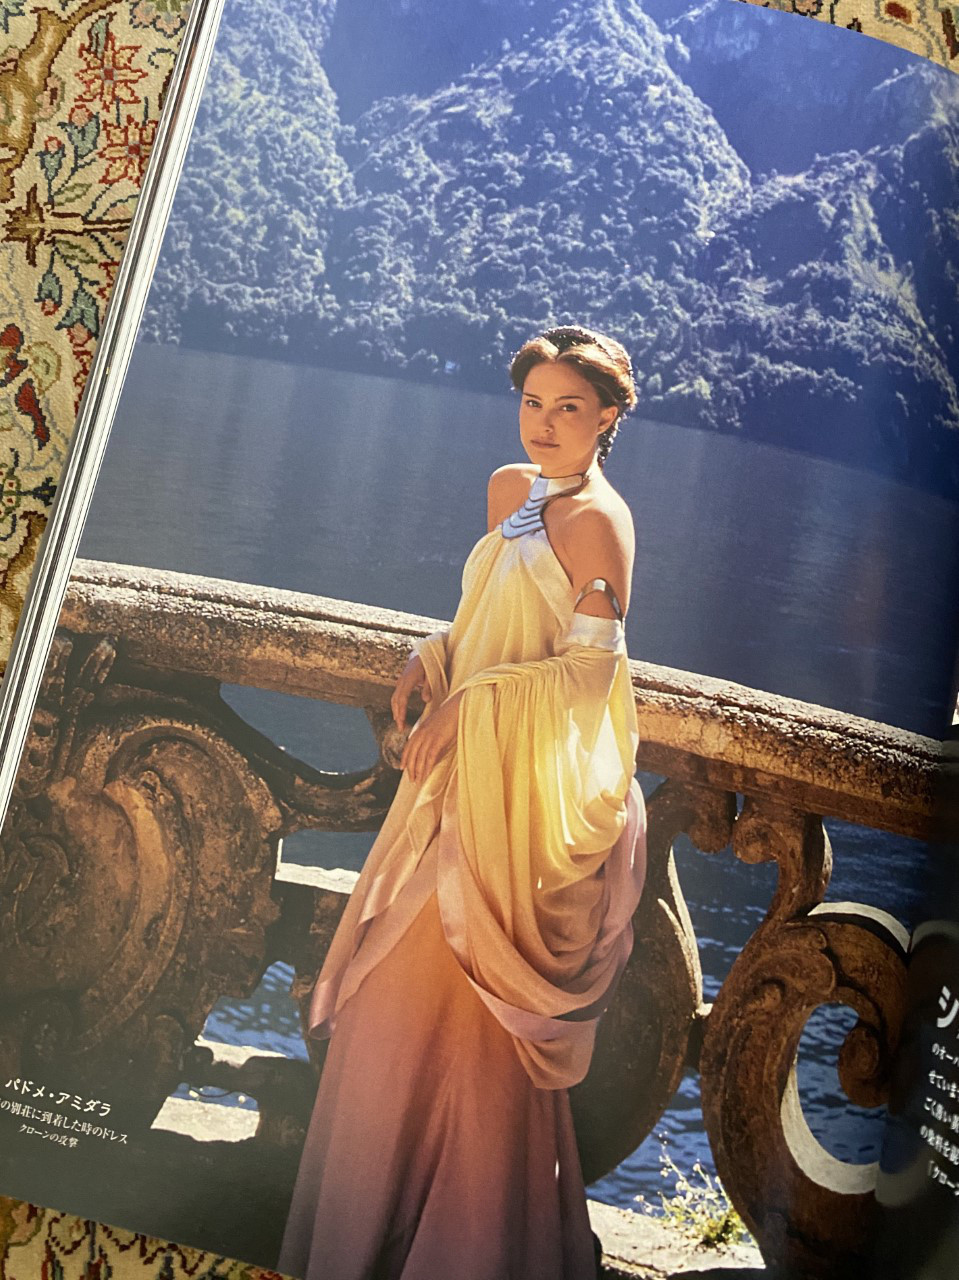 Dressing A Galaxy スター ウォーズの衣装 混ぜ合わせの美 Vogue Blog